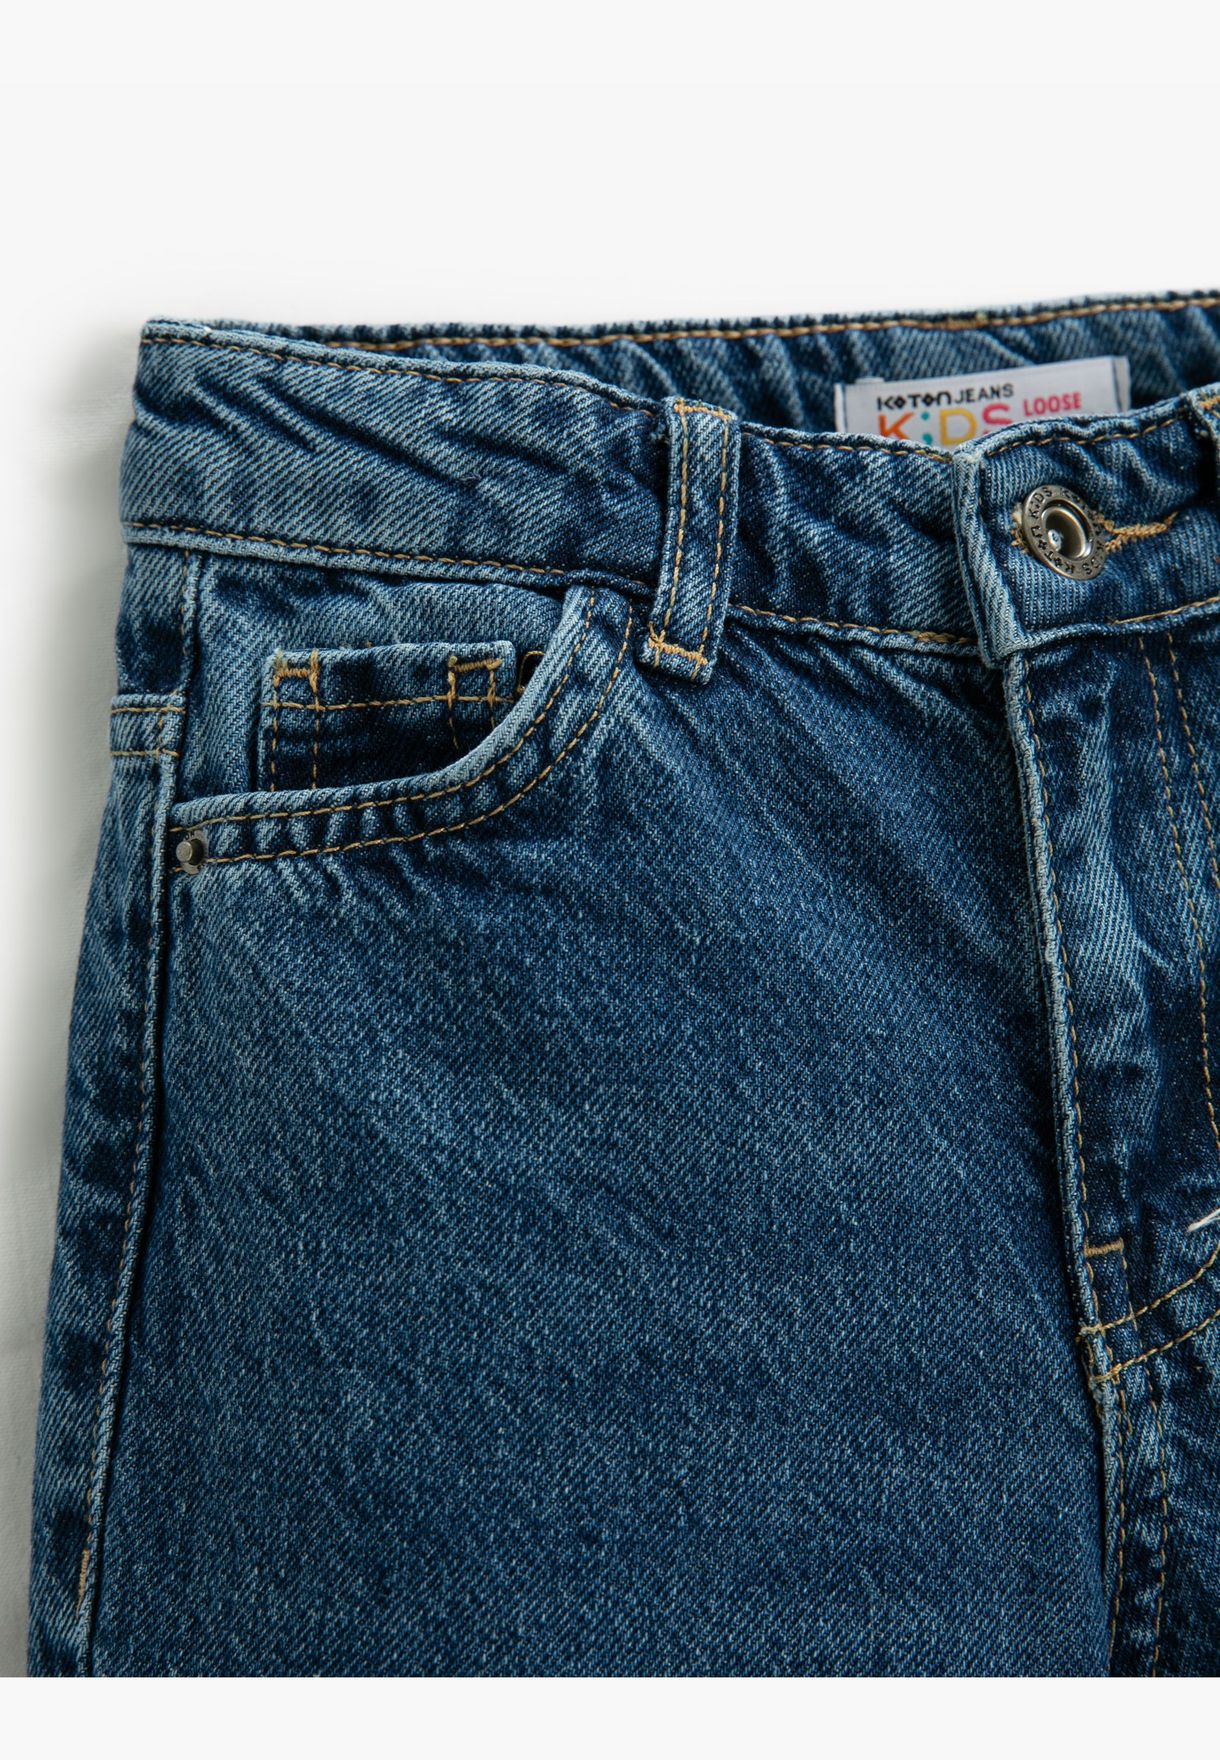 Jegging Jean - Button Closure Cotton Pockets 